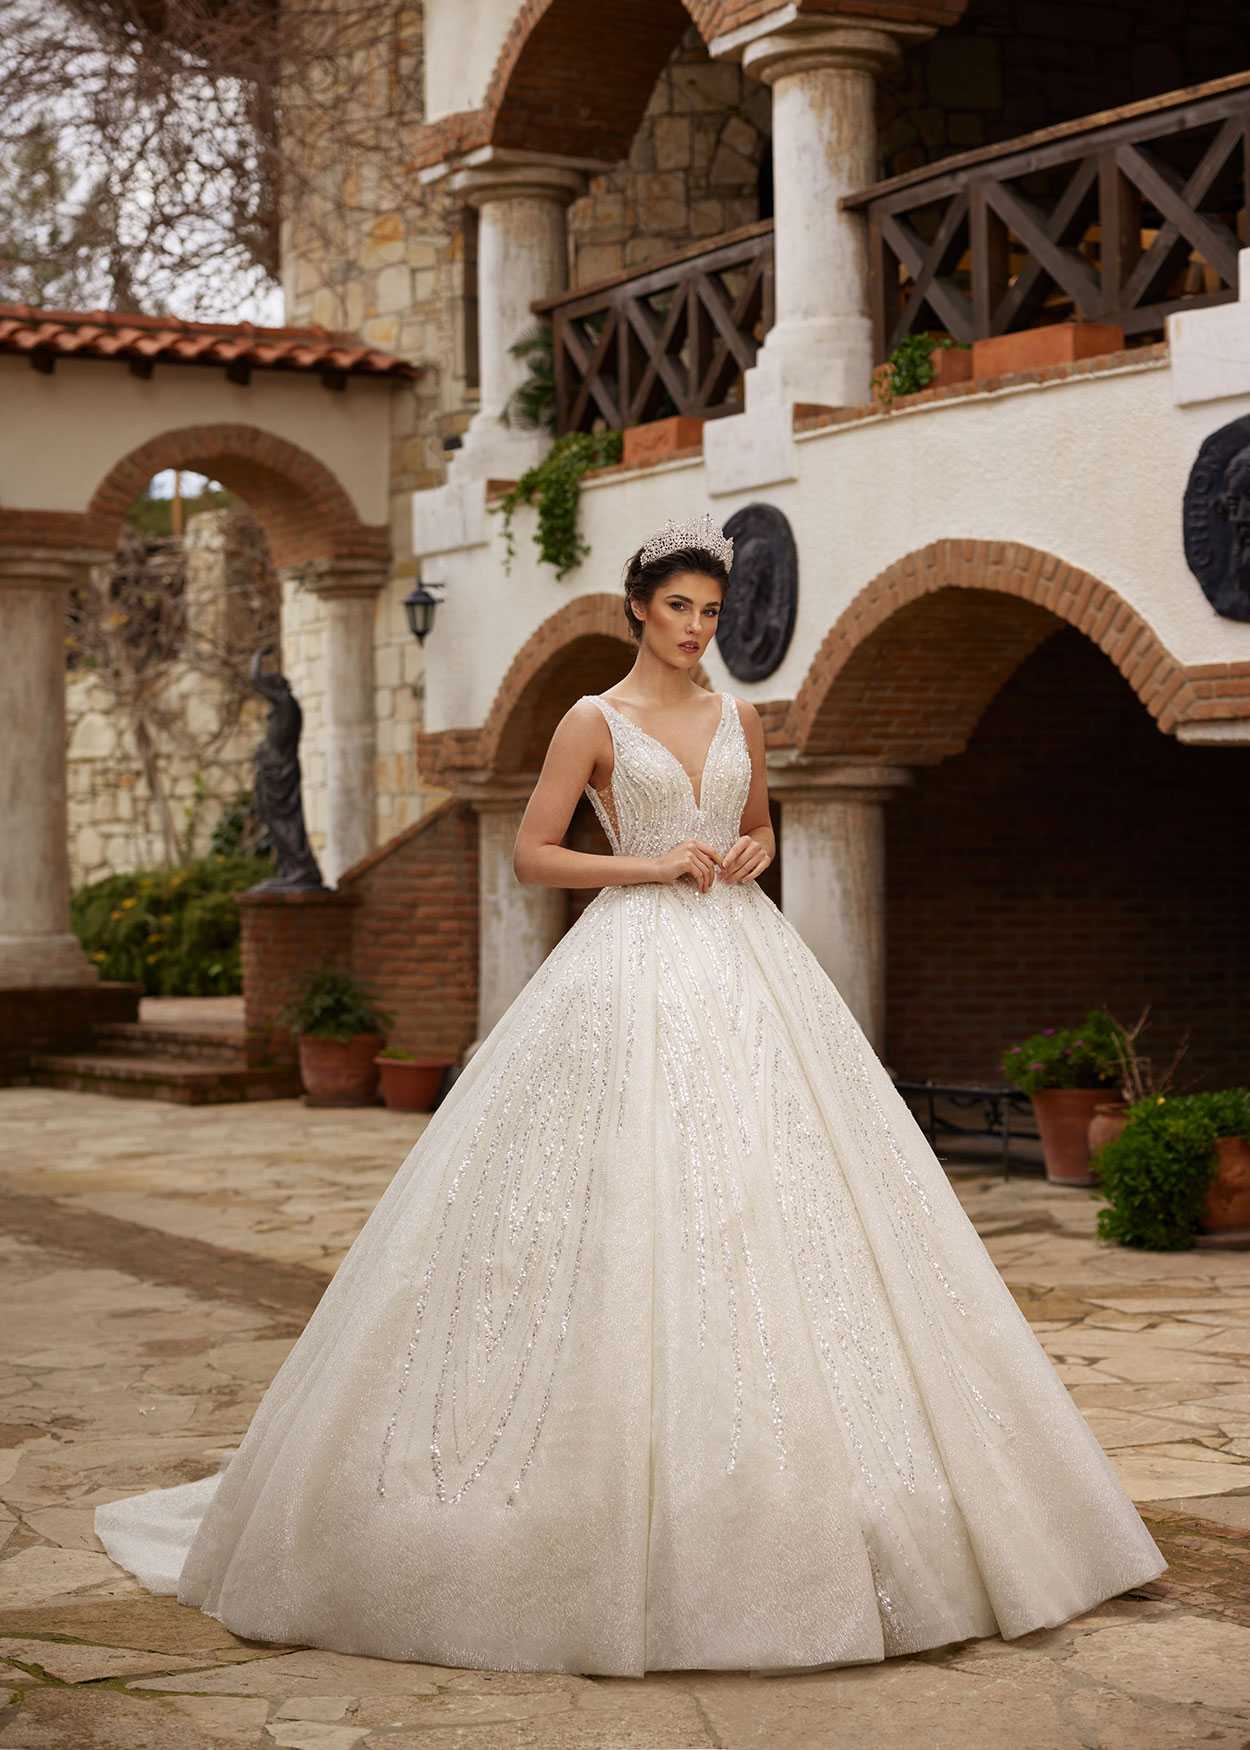 buy Plus Size Elegant Yet Simple Sleeveless Princess Wedding Gown With Train bridale dresses online